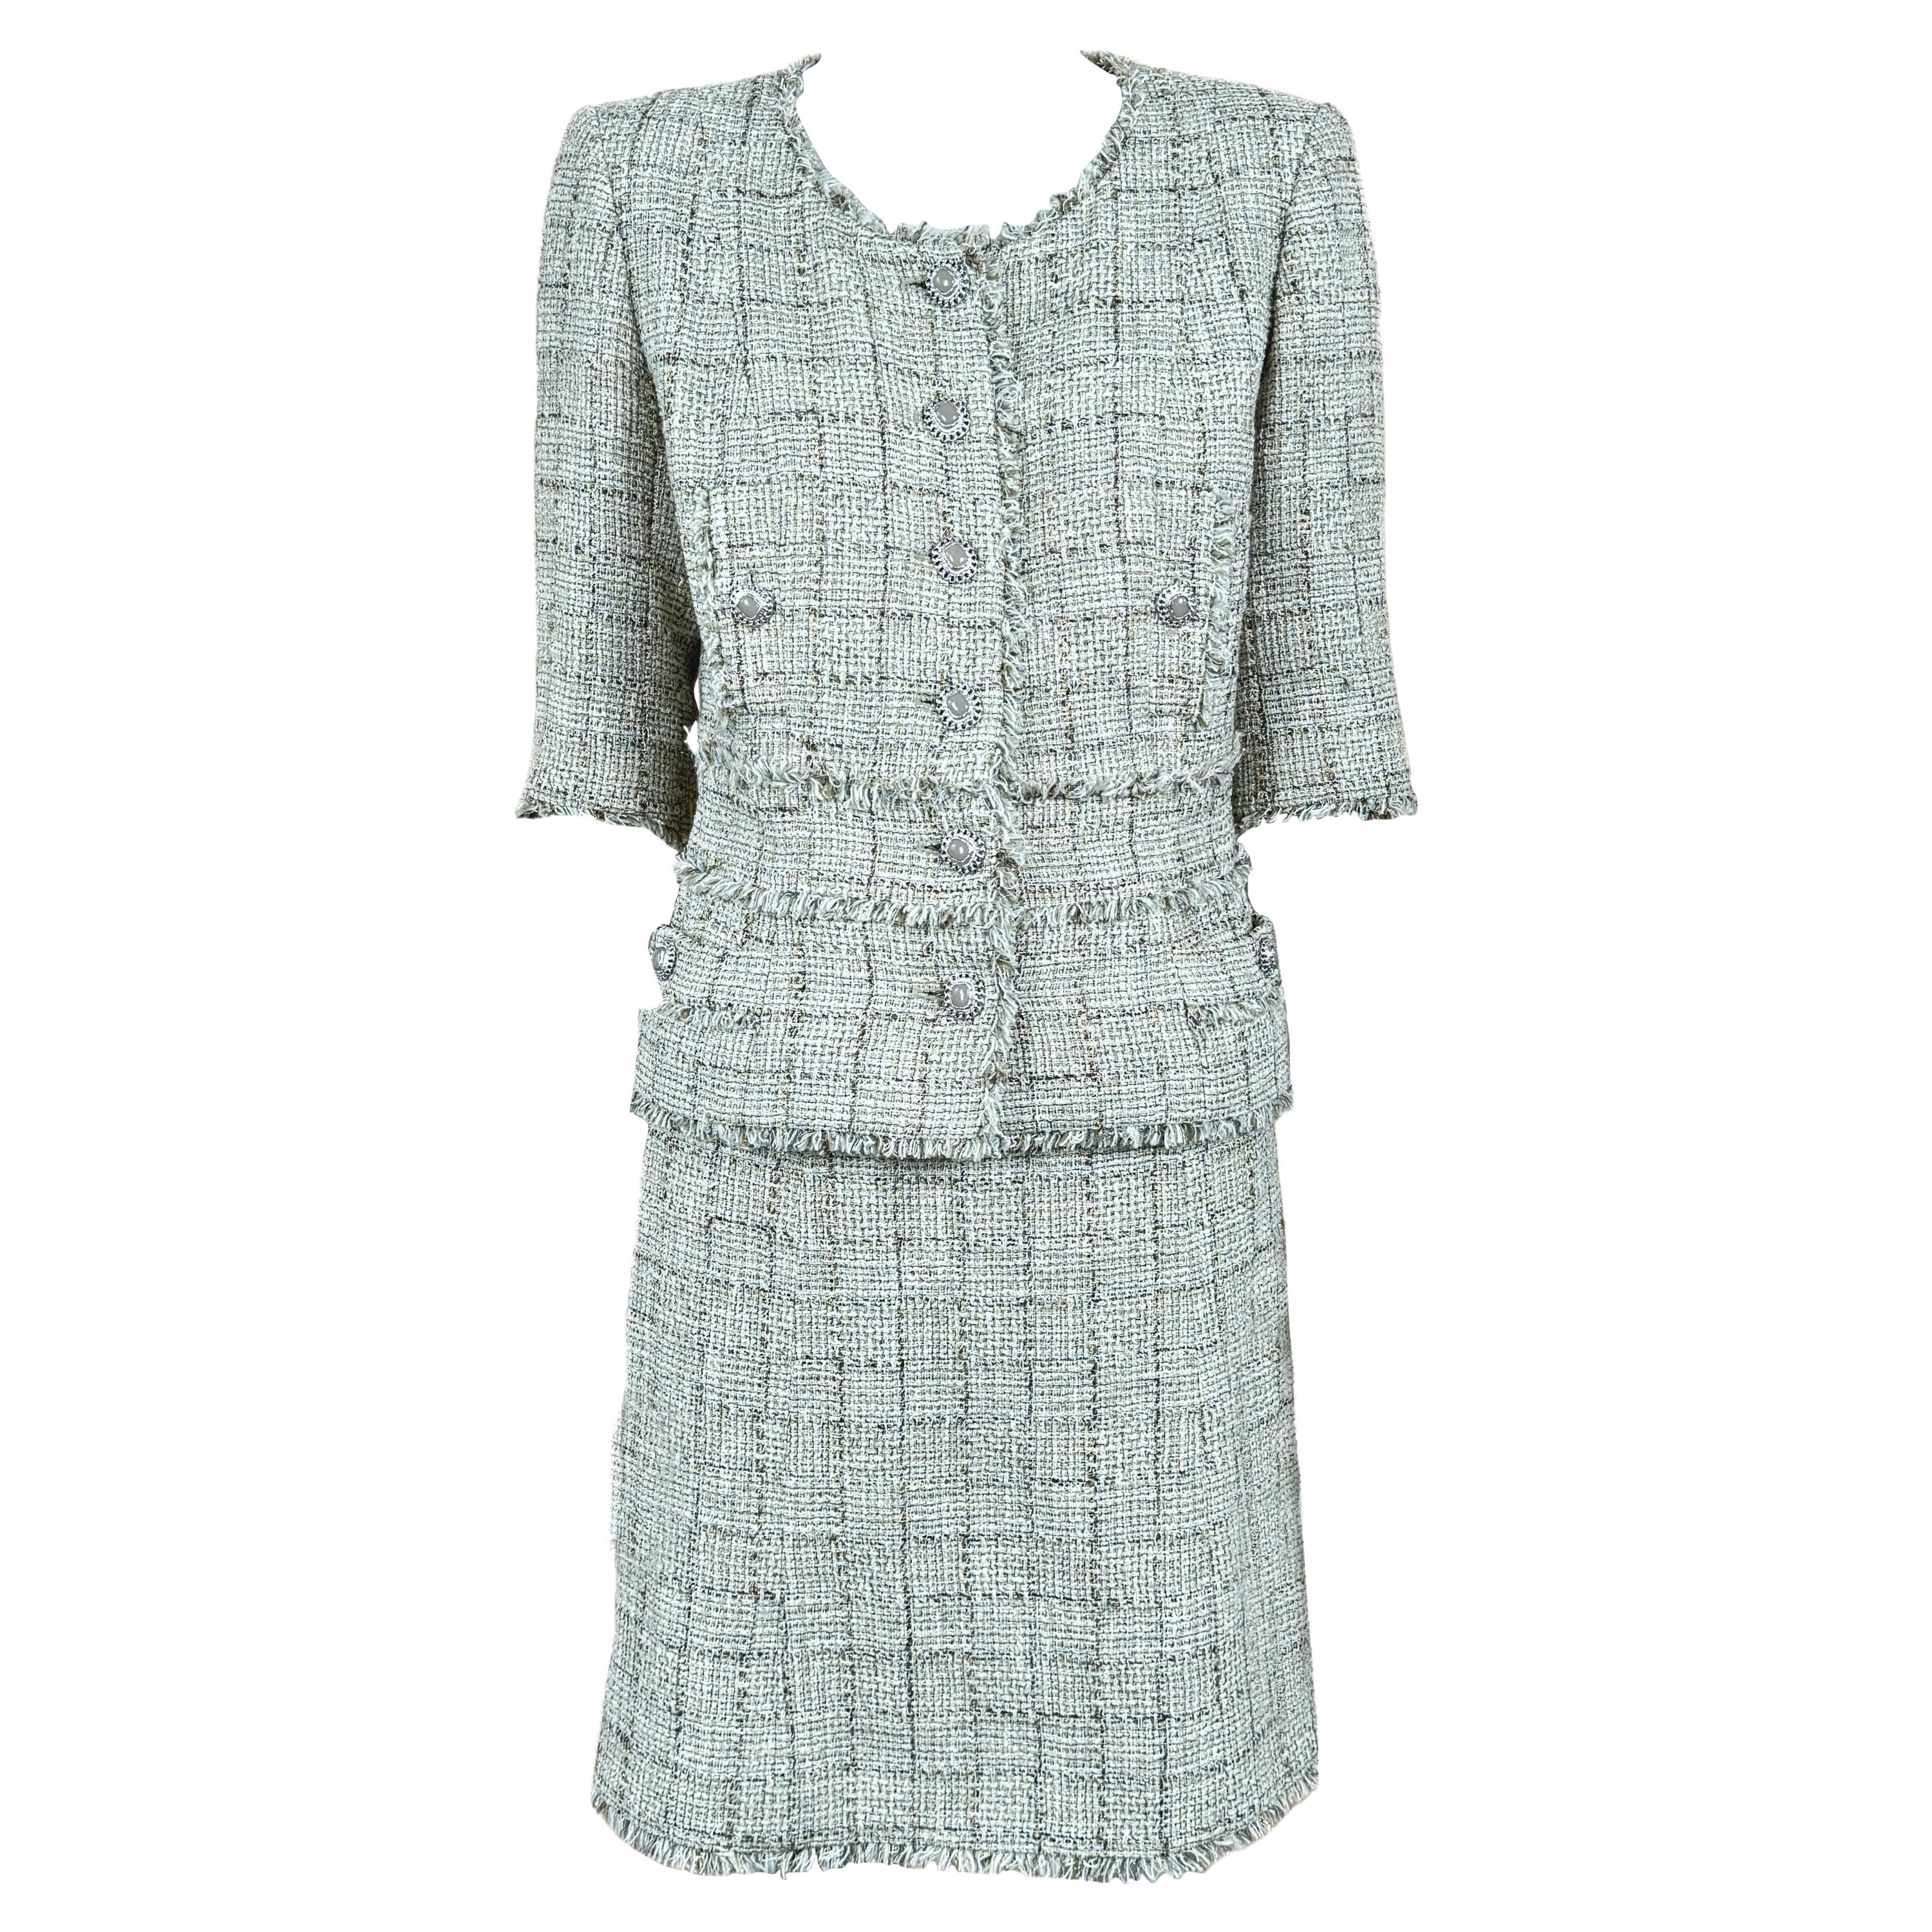 Chanel Gisele Bundchen Style Jewel Buttons Tweed Suit For Sale